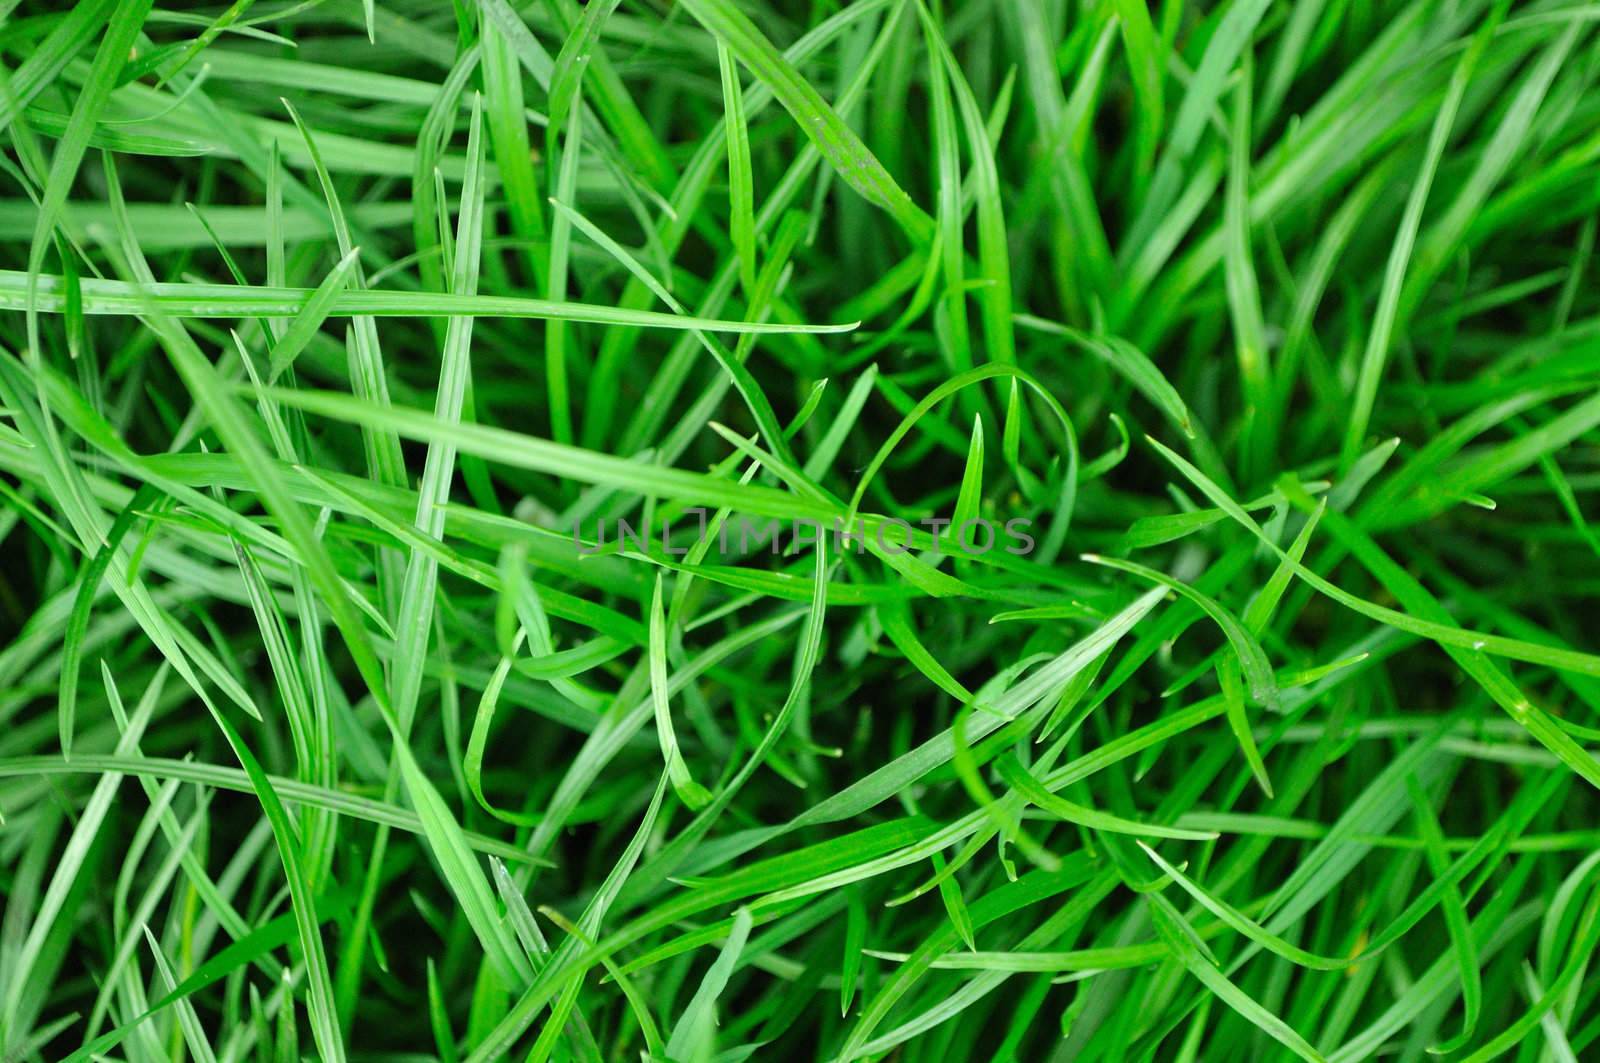 Fresh spring field grass (wheat grass) as a background